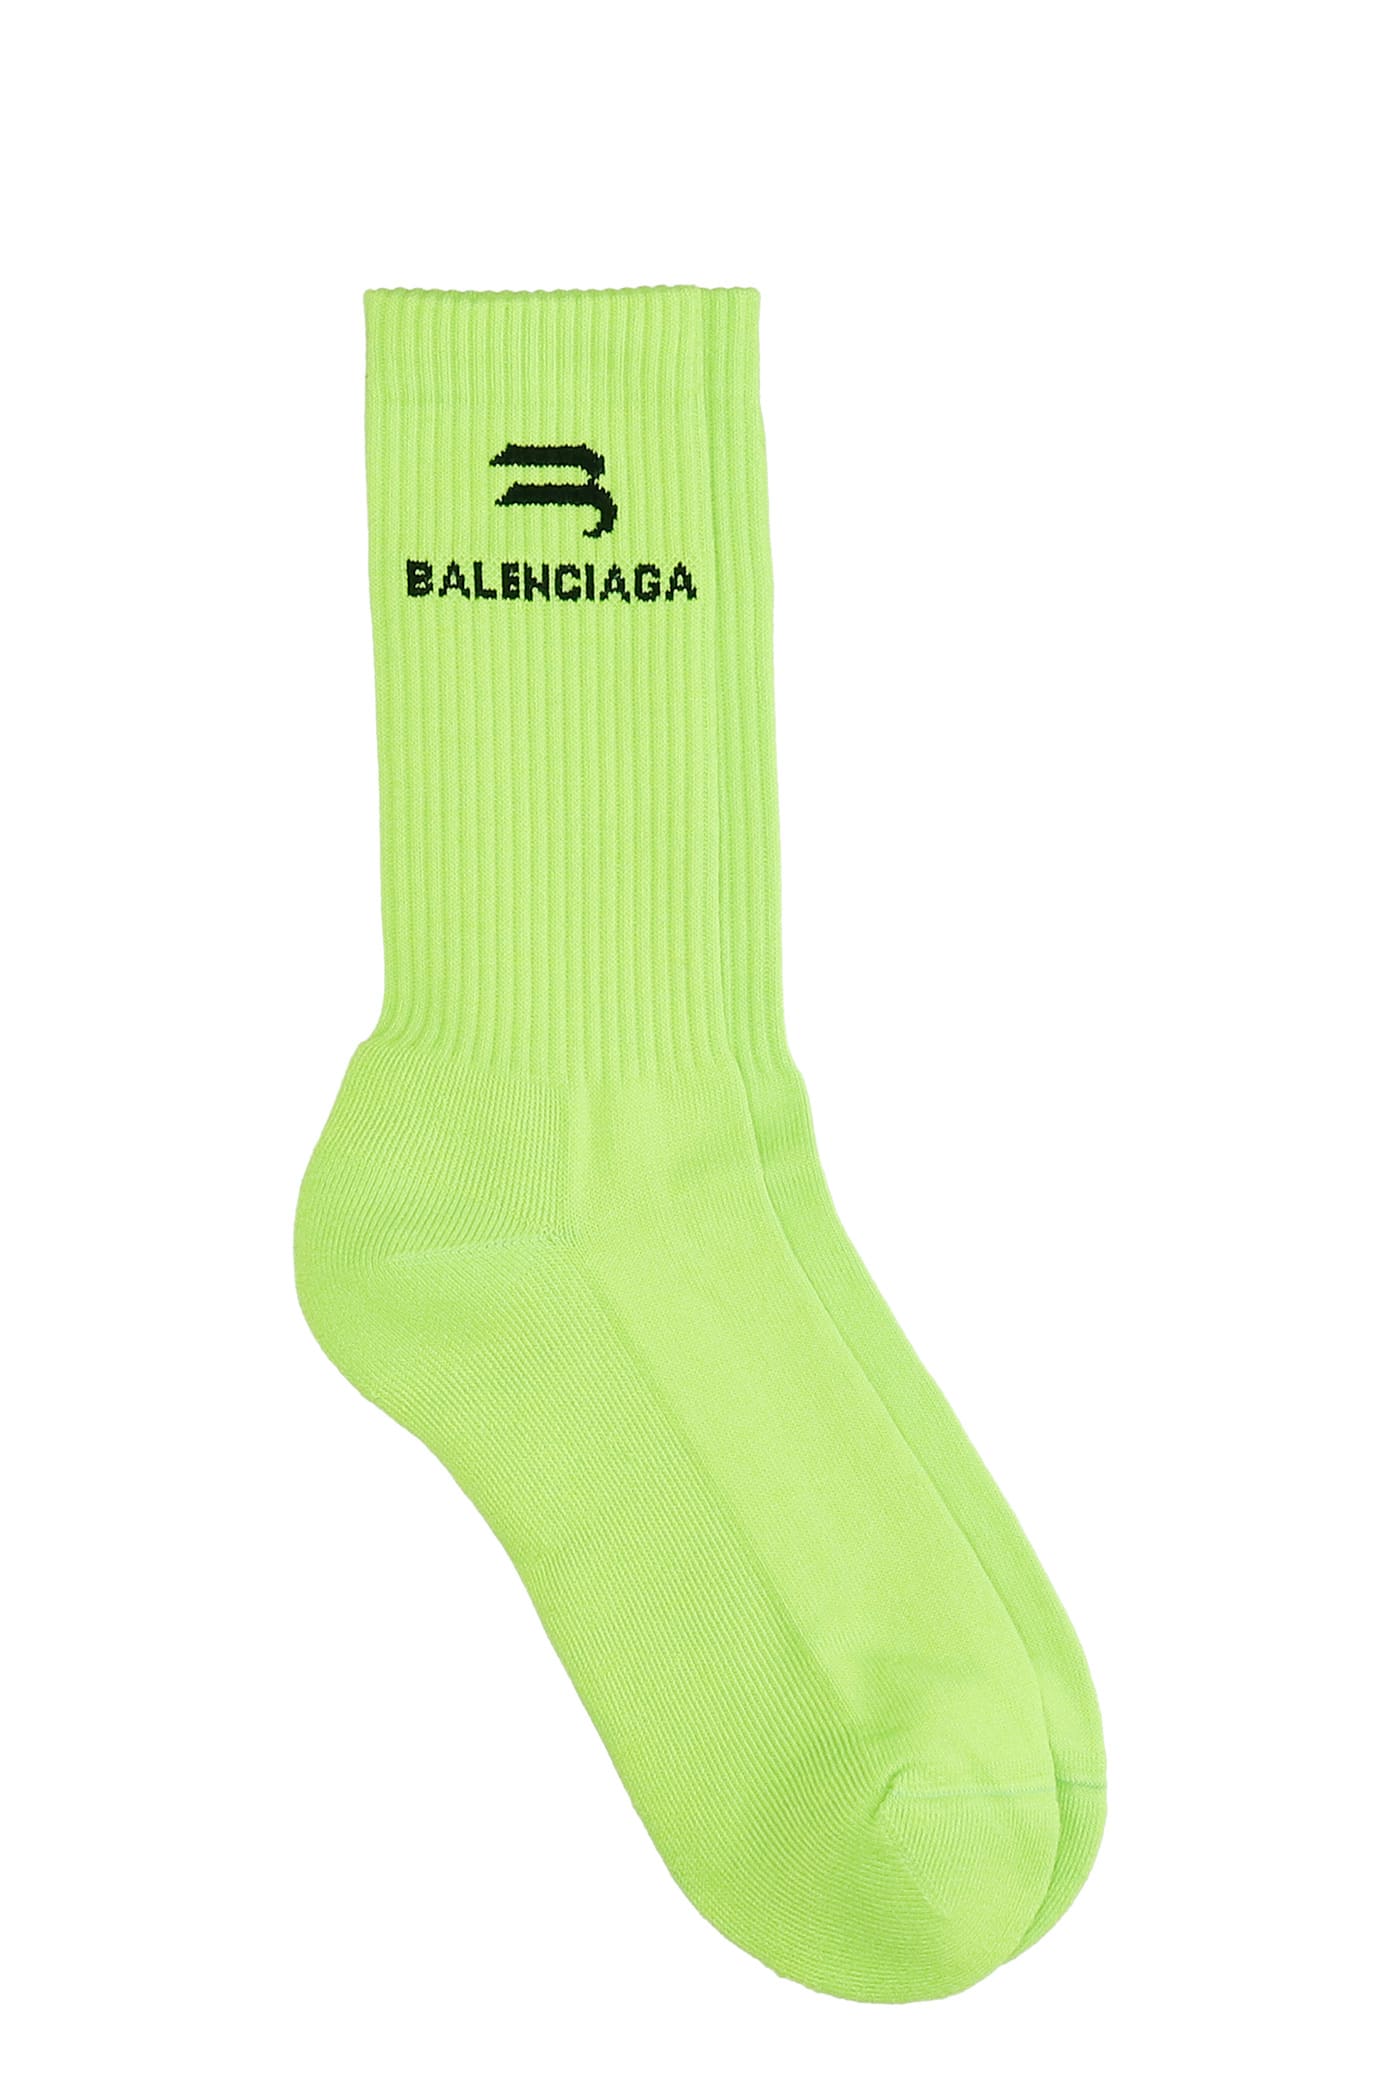 Balenciaga Socks In Green Polyester